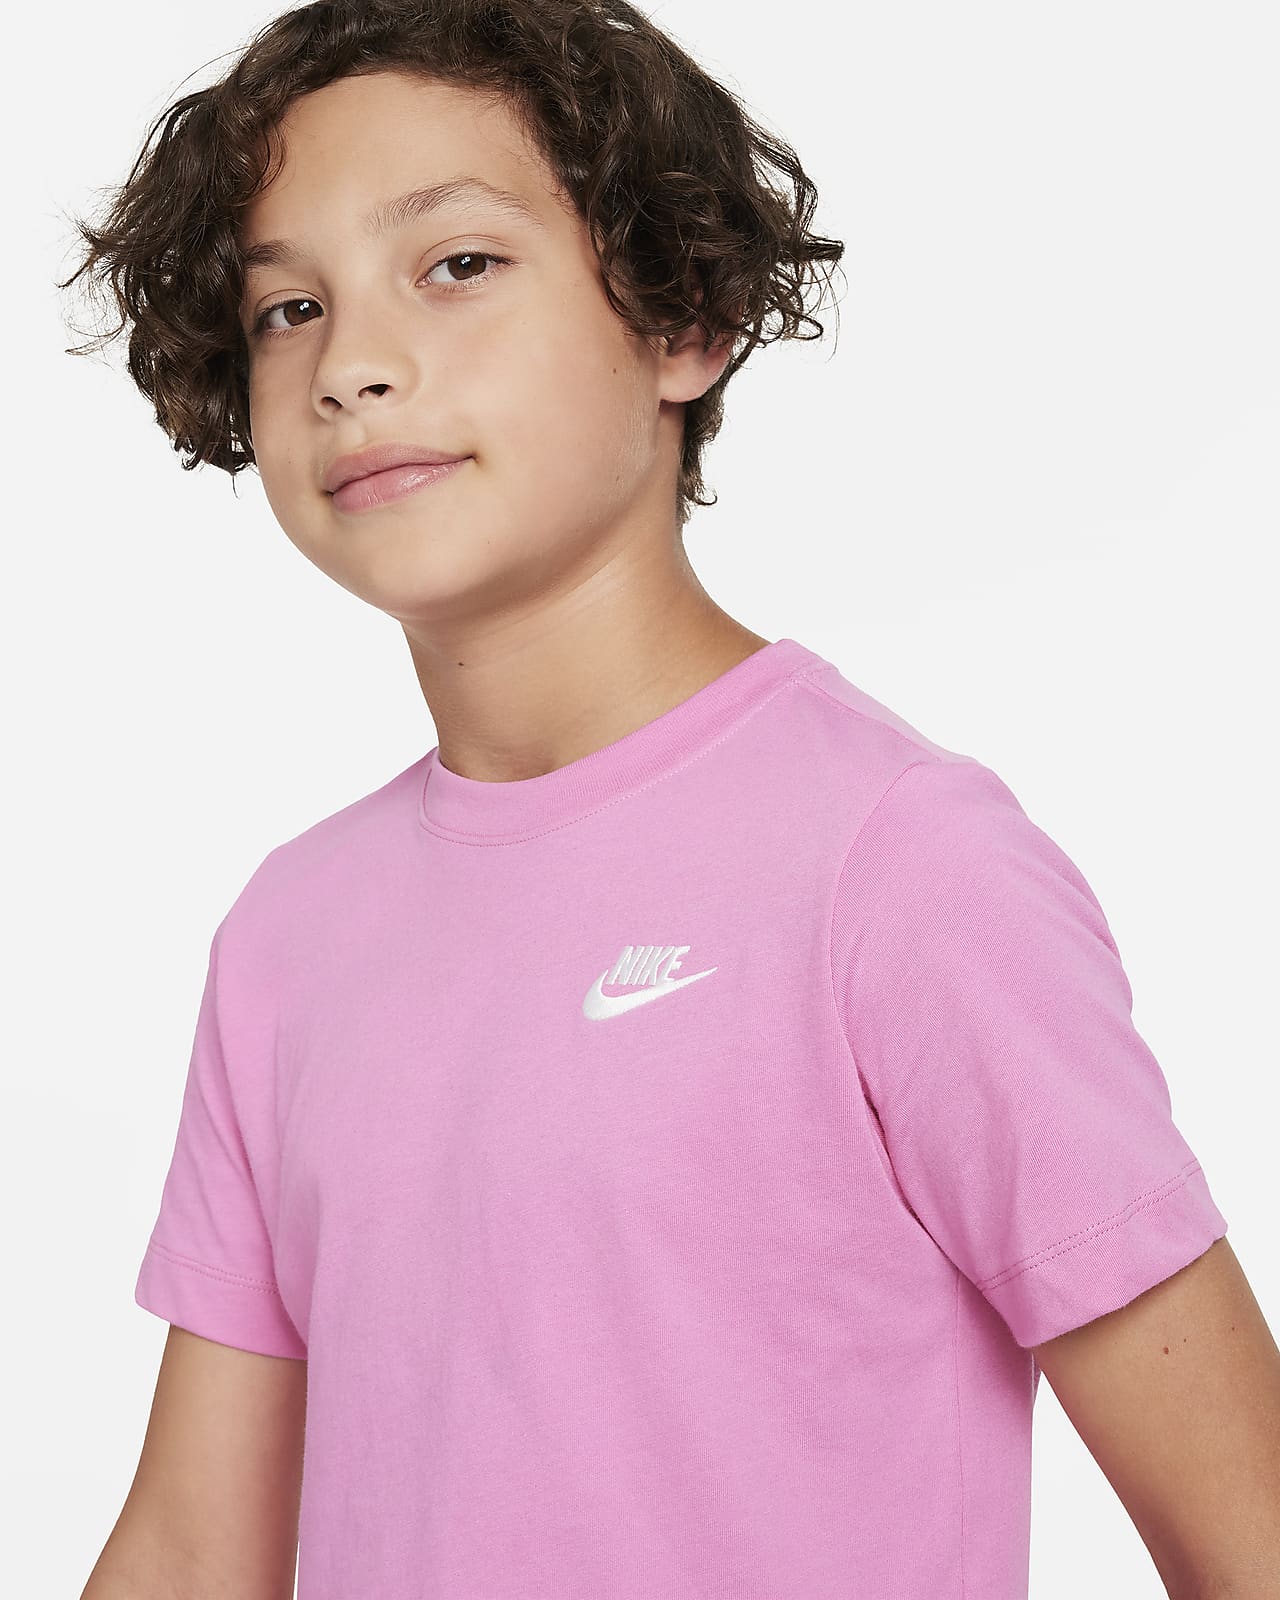  Plain Pink T Shirts For Men, Women, Boys, Girls, Teens :  Clothing, Shoes & Jewelry